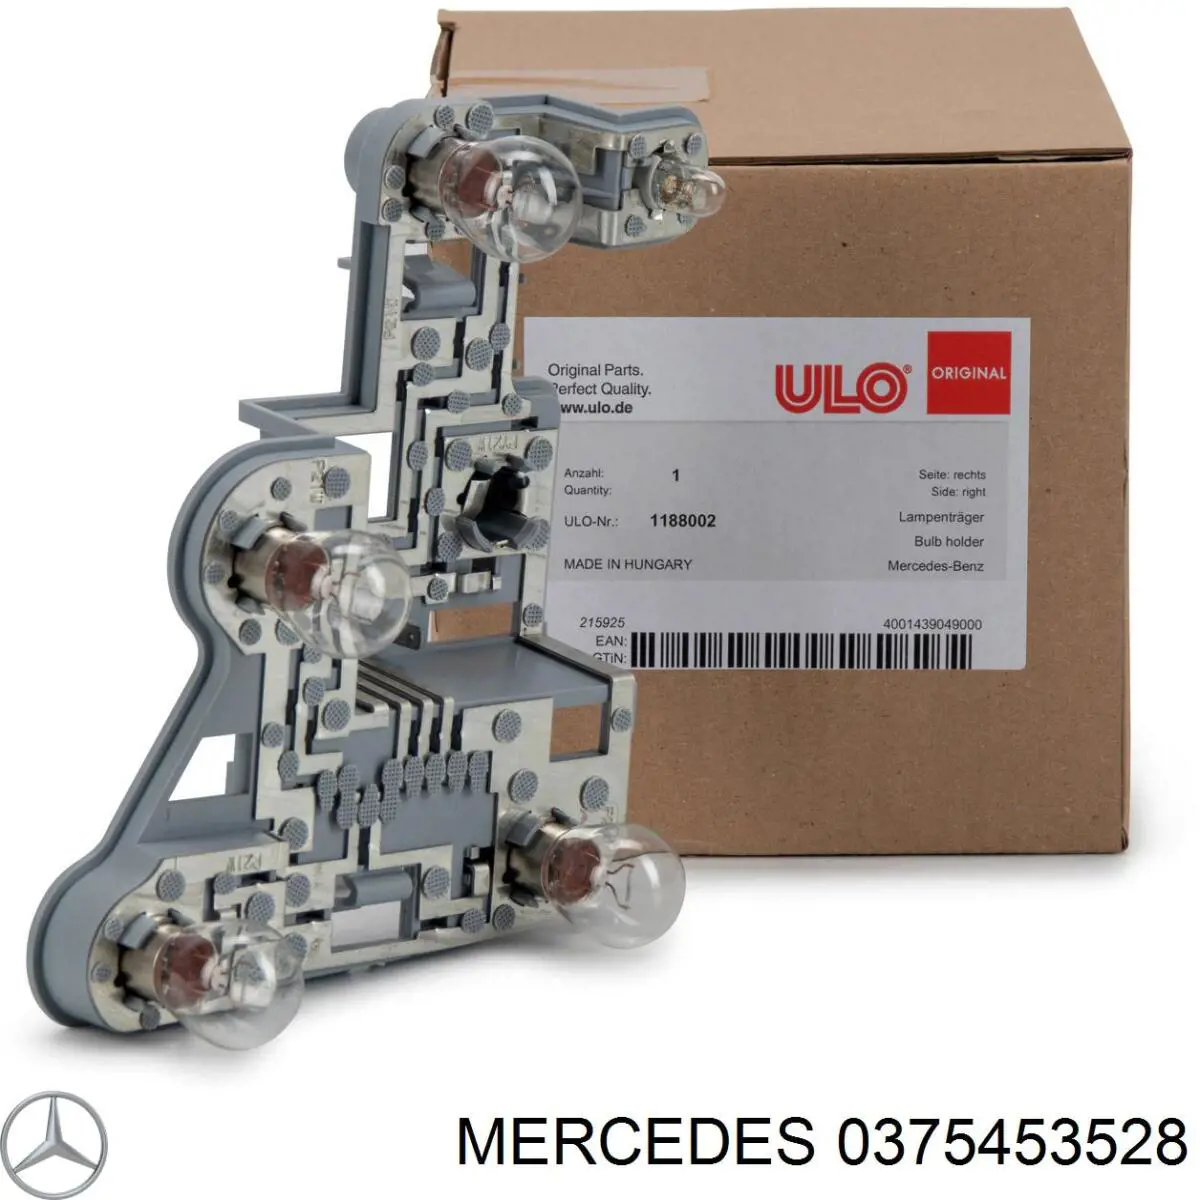 A0375453528 Mercedes